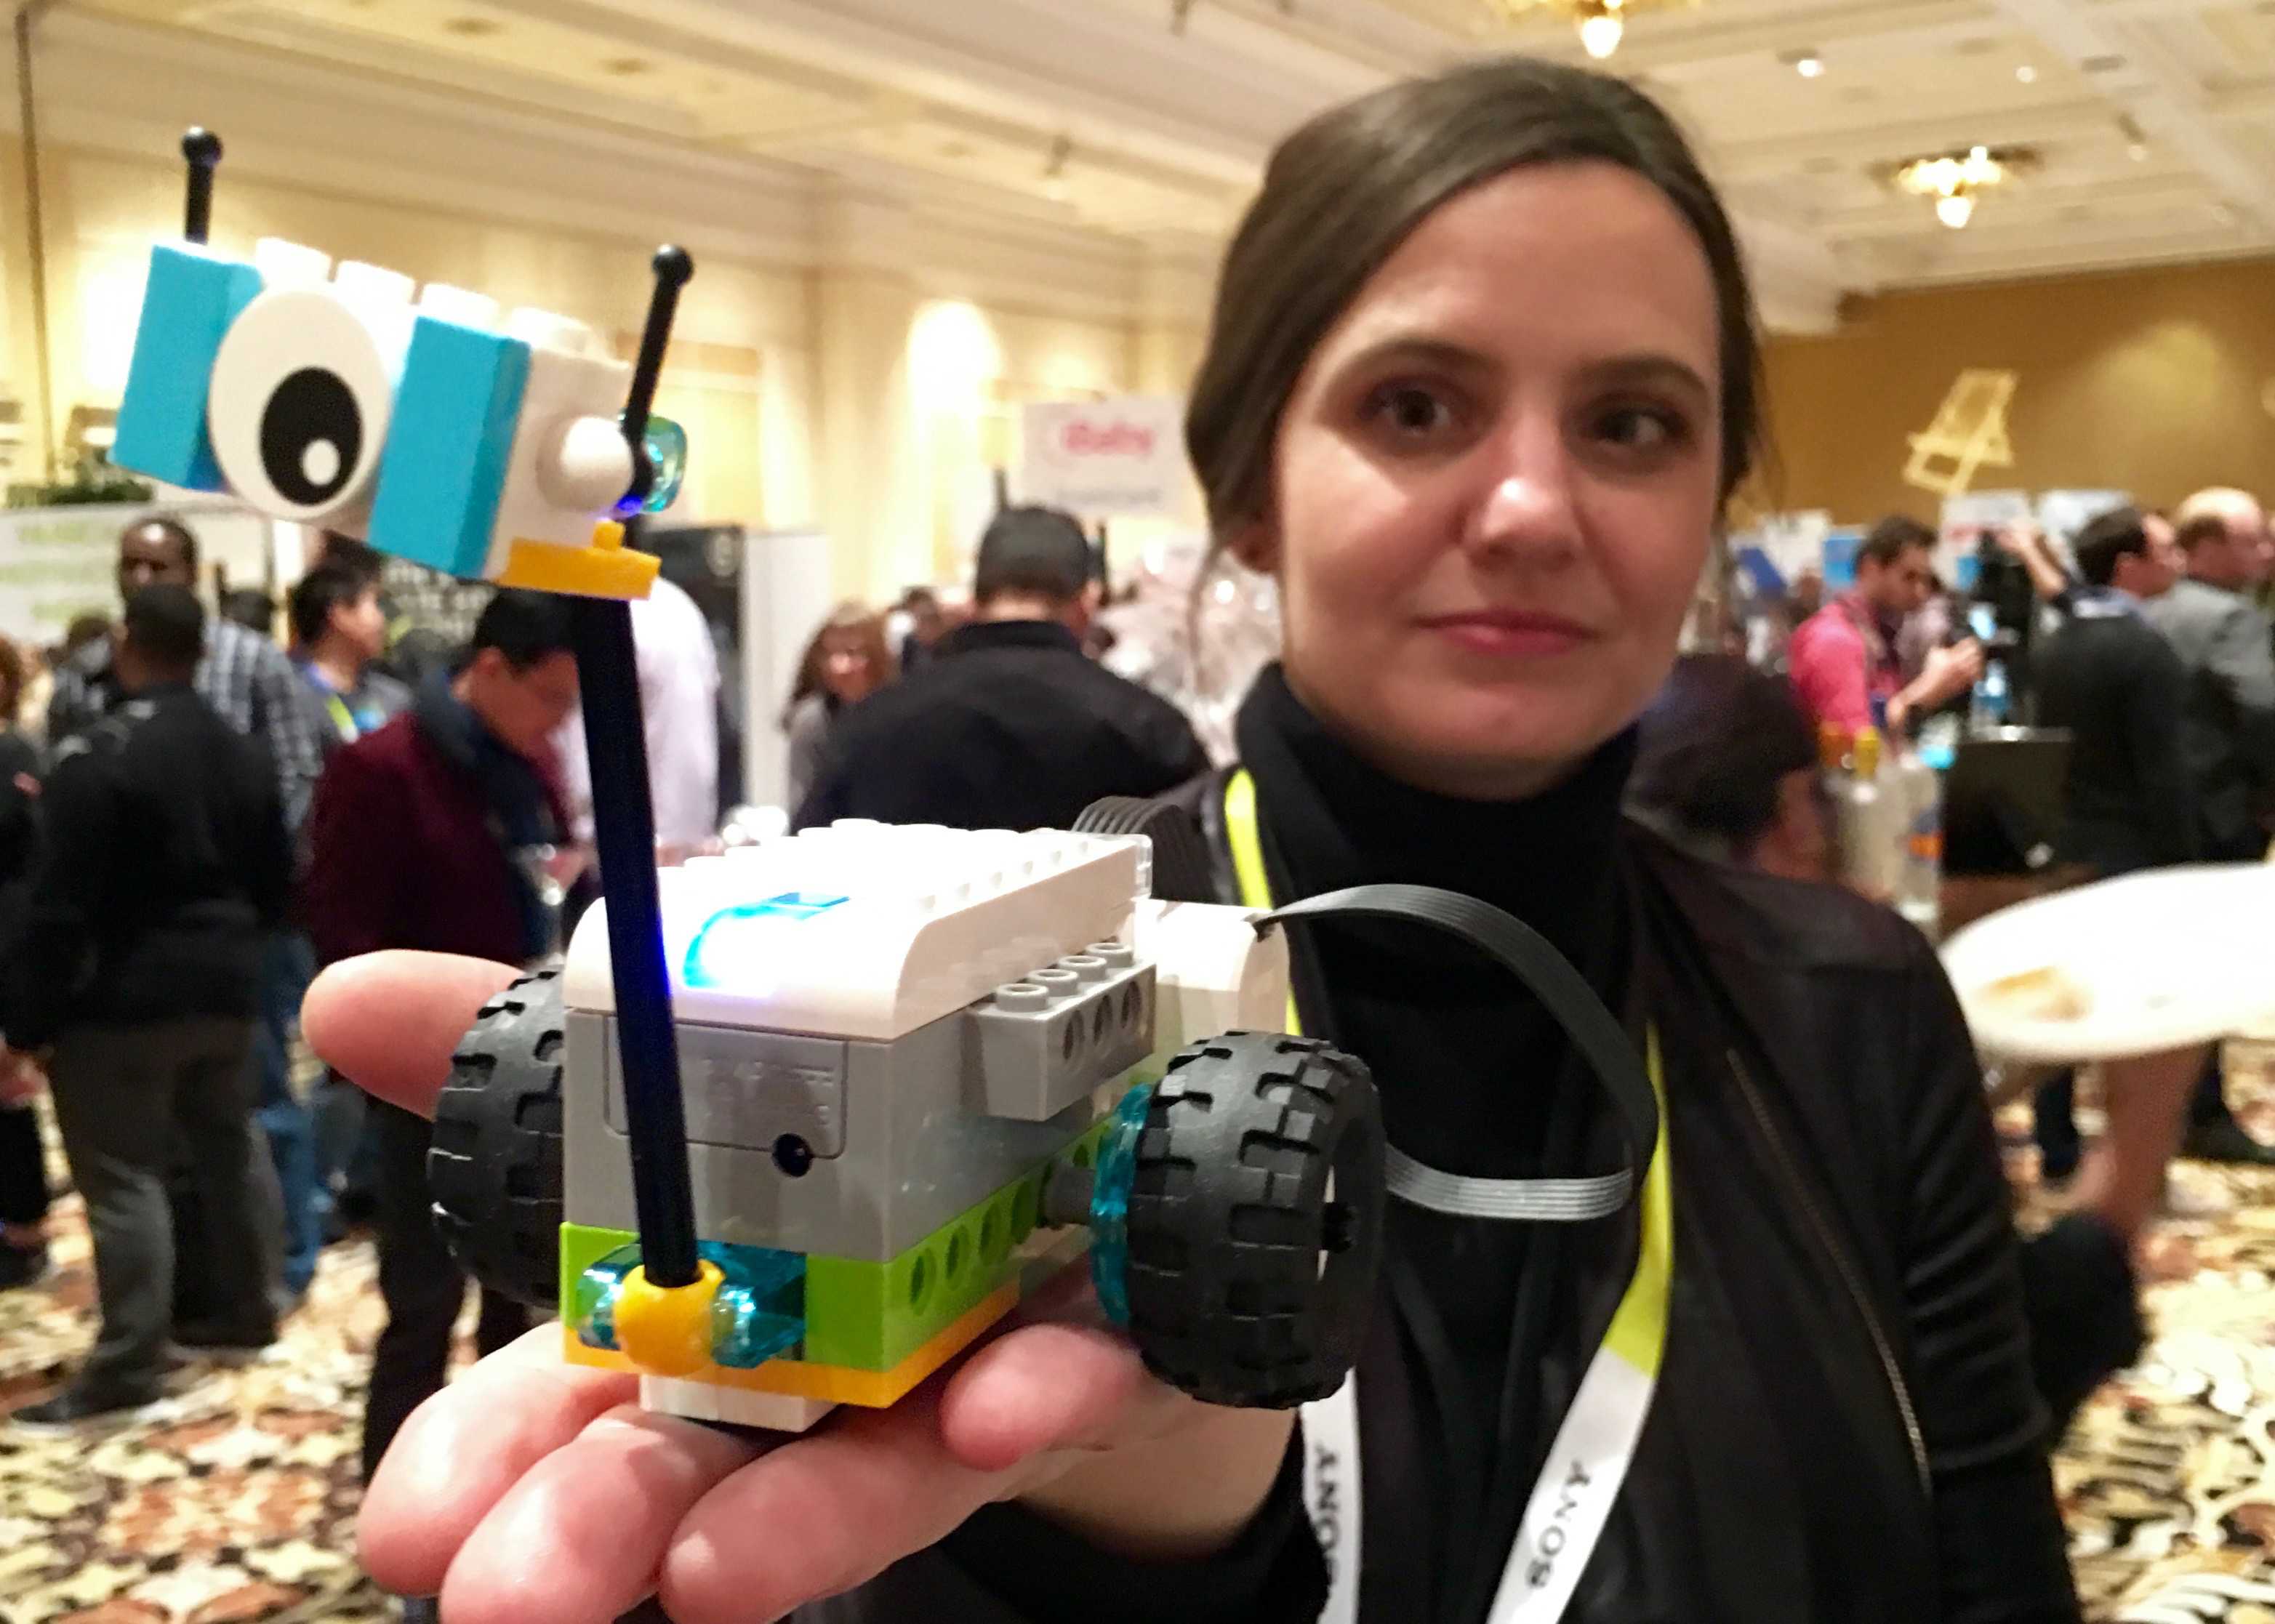 Lego's WeDo robotics kit teaches science concepts to elementary school kids.